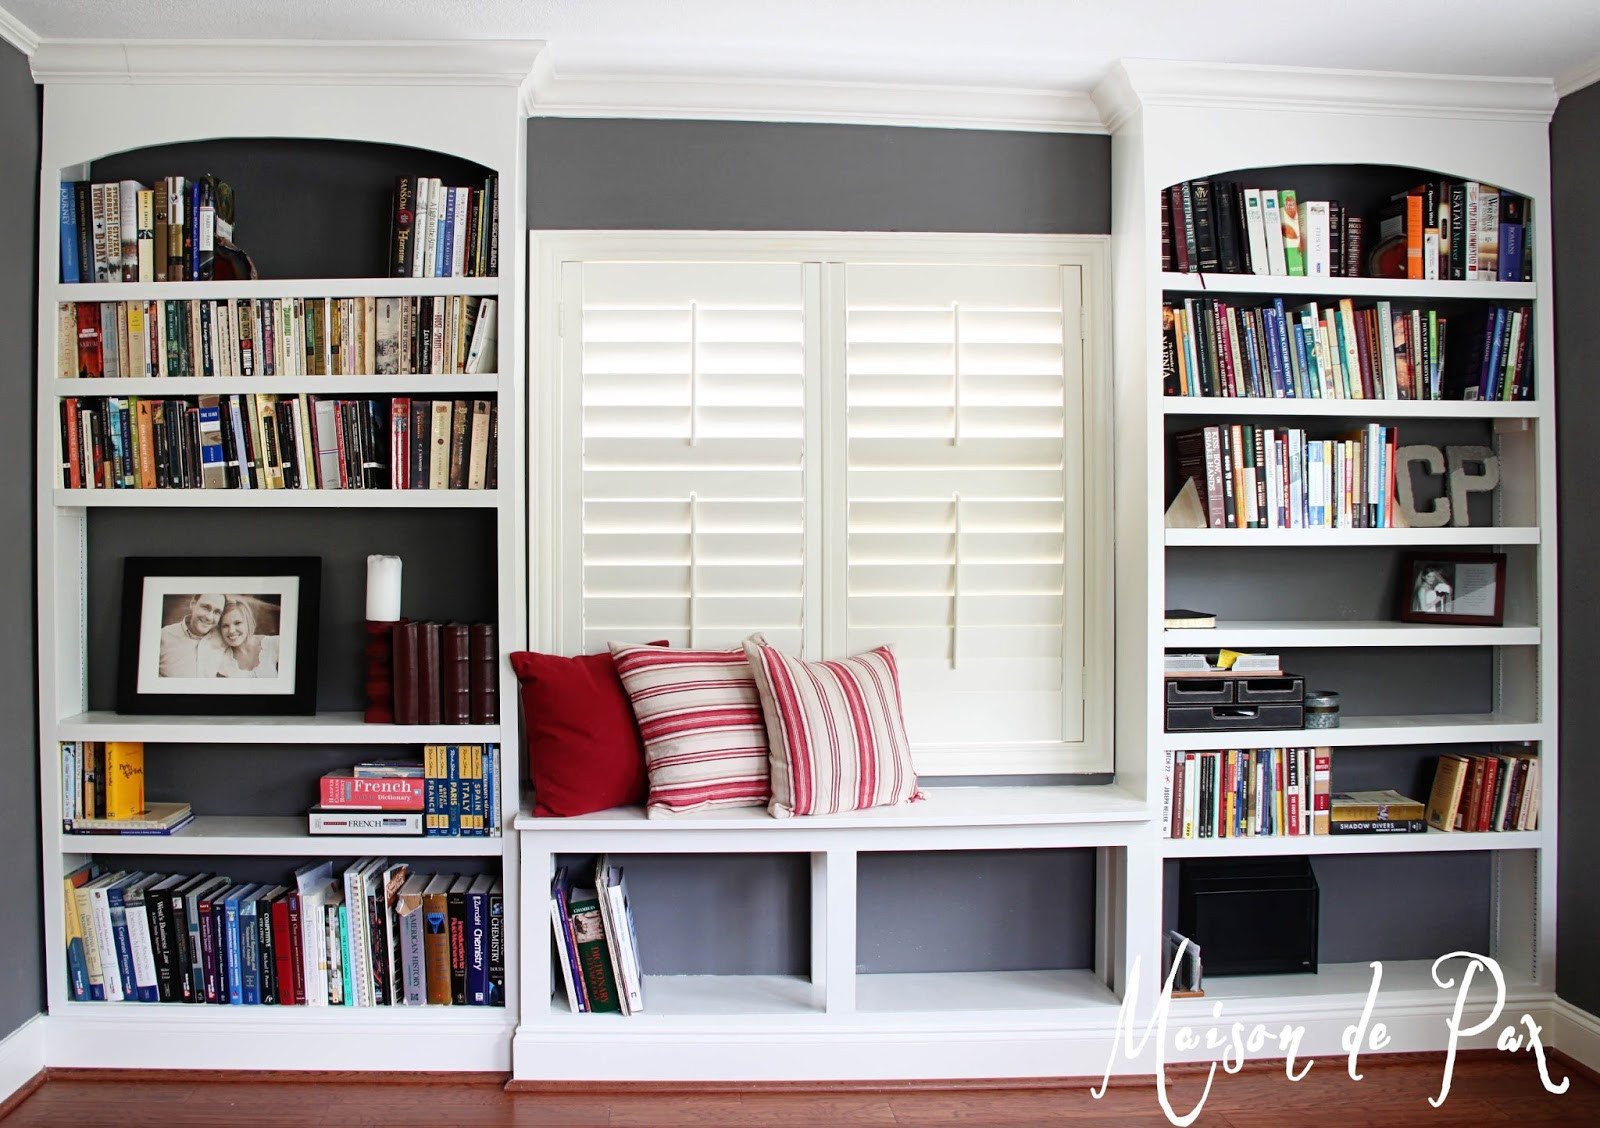 Best ideas about DIY Wall Shelves For Books
. Save or Pin DIY Built In Bookshelves Maison de Pax Now.